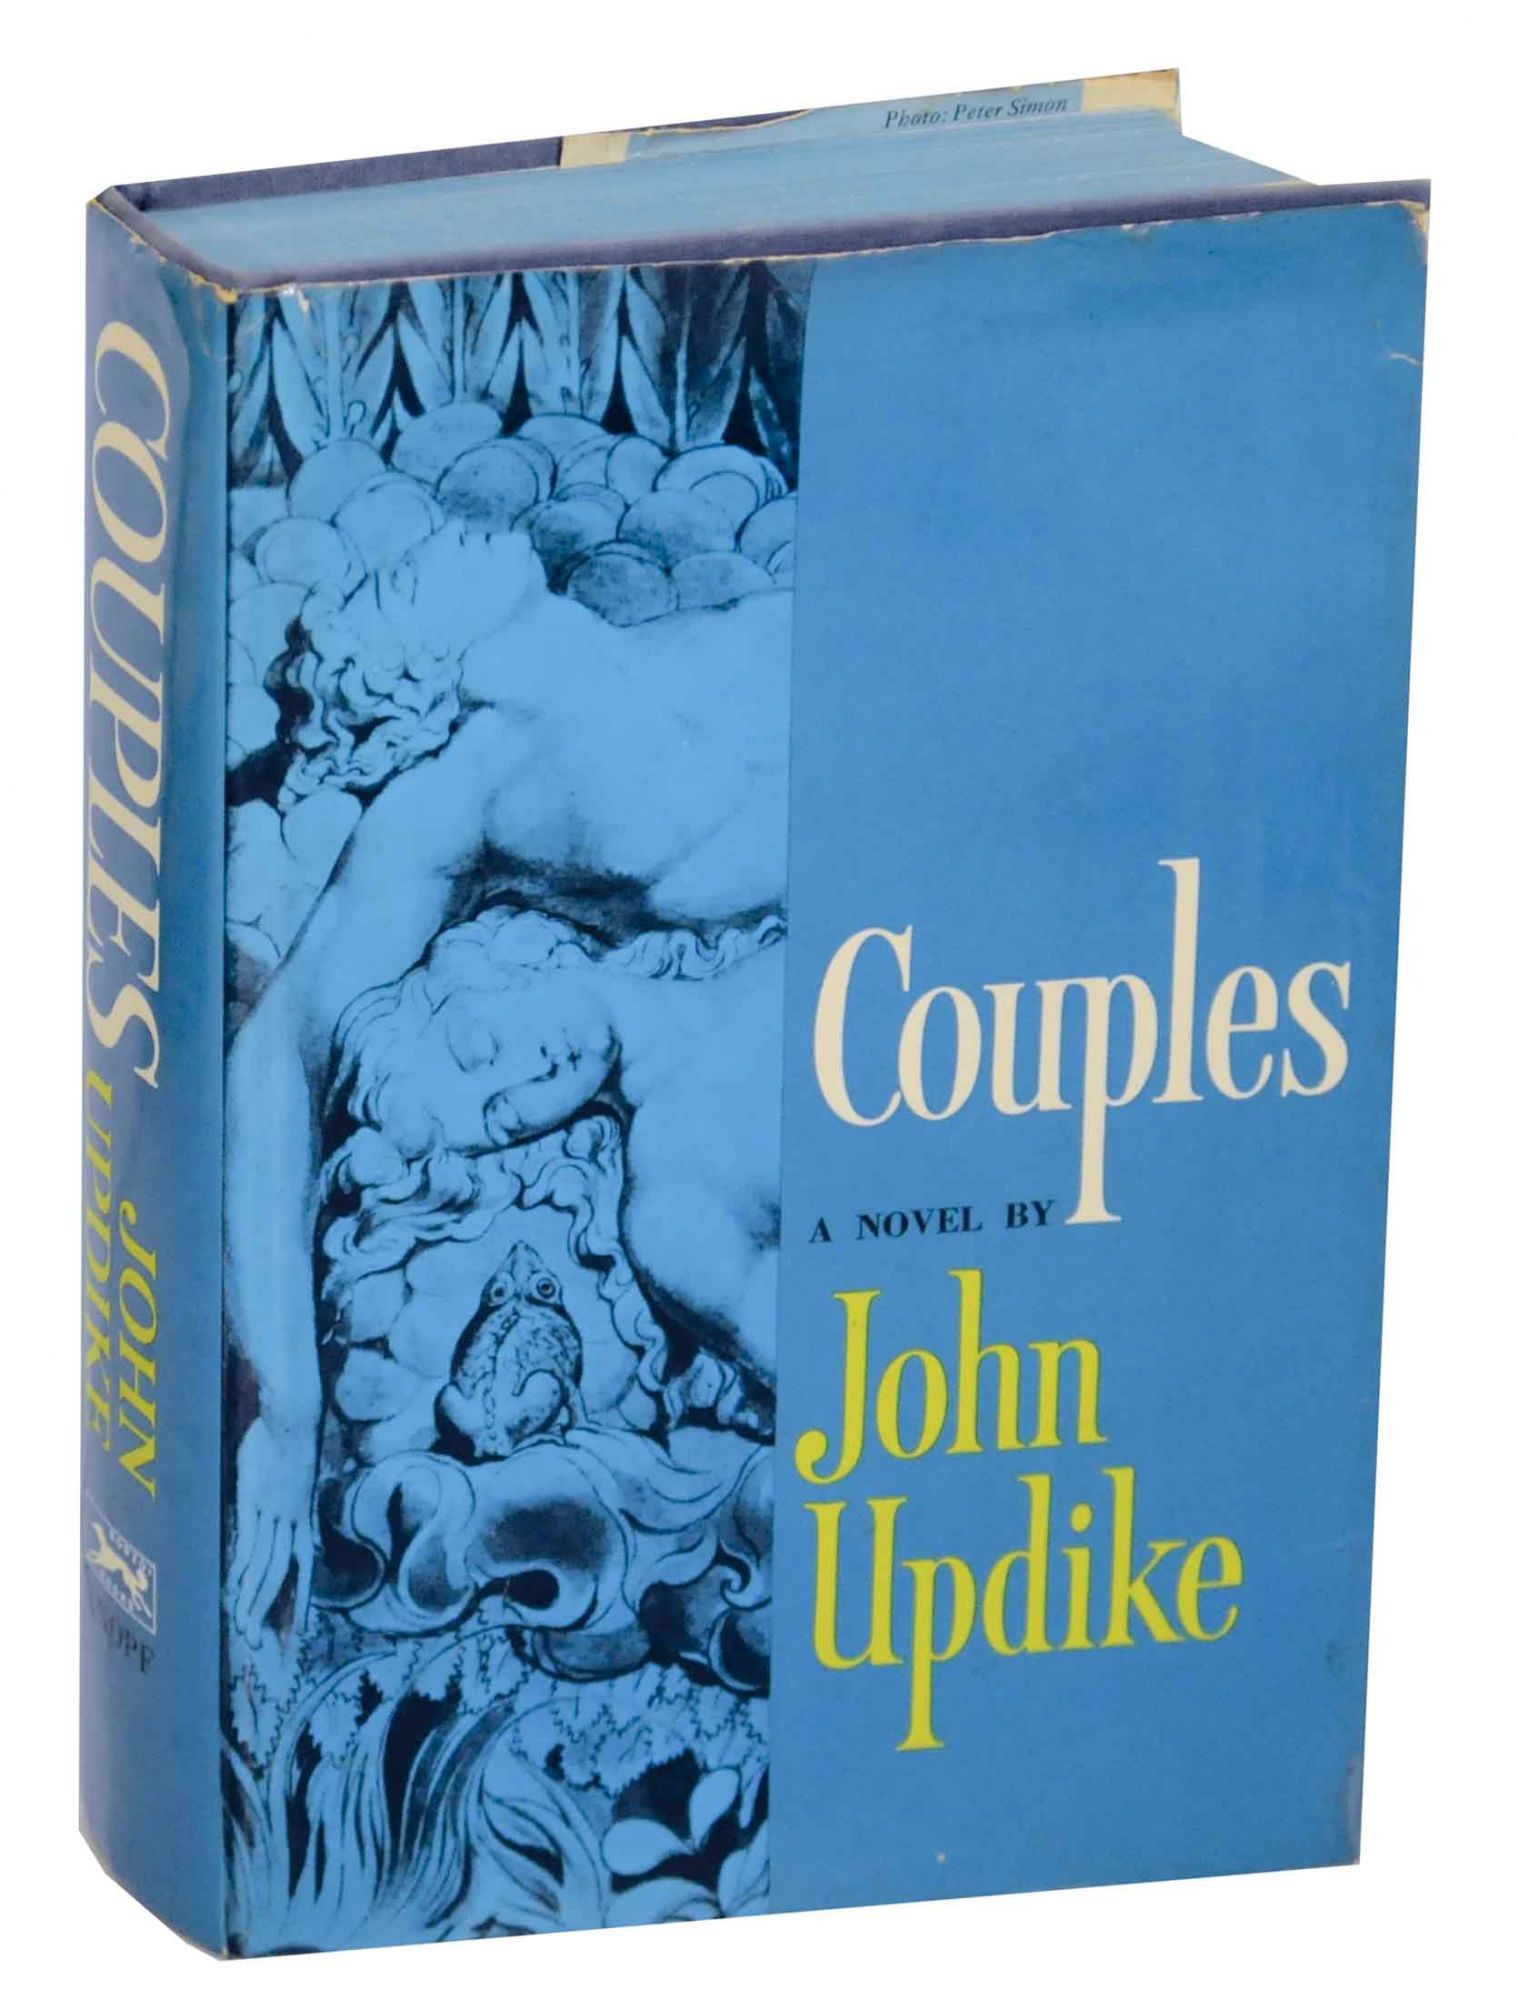 Couples by John UPDIKE on Jeff Hirsch Books